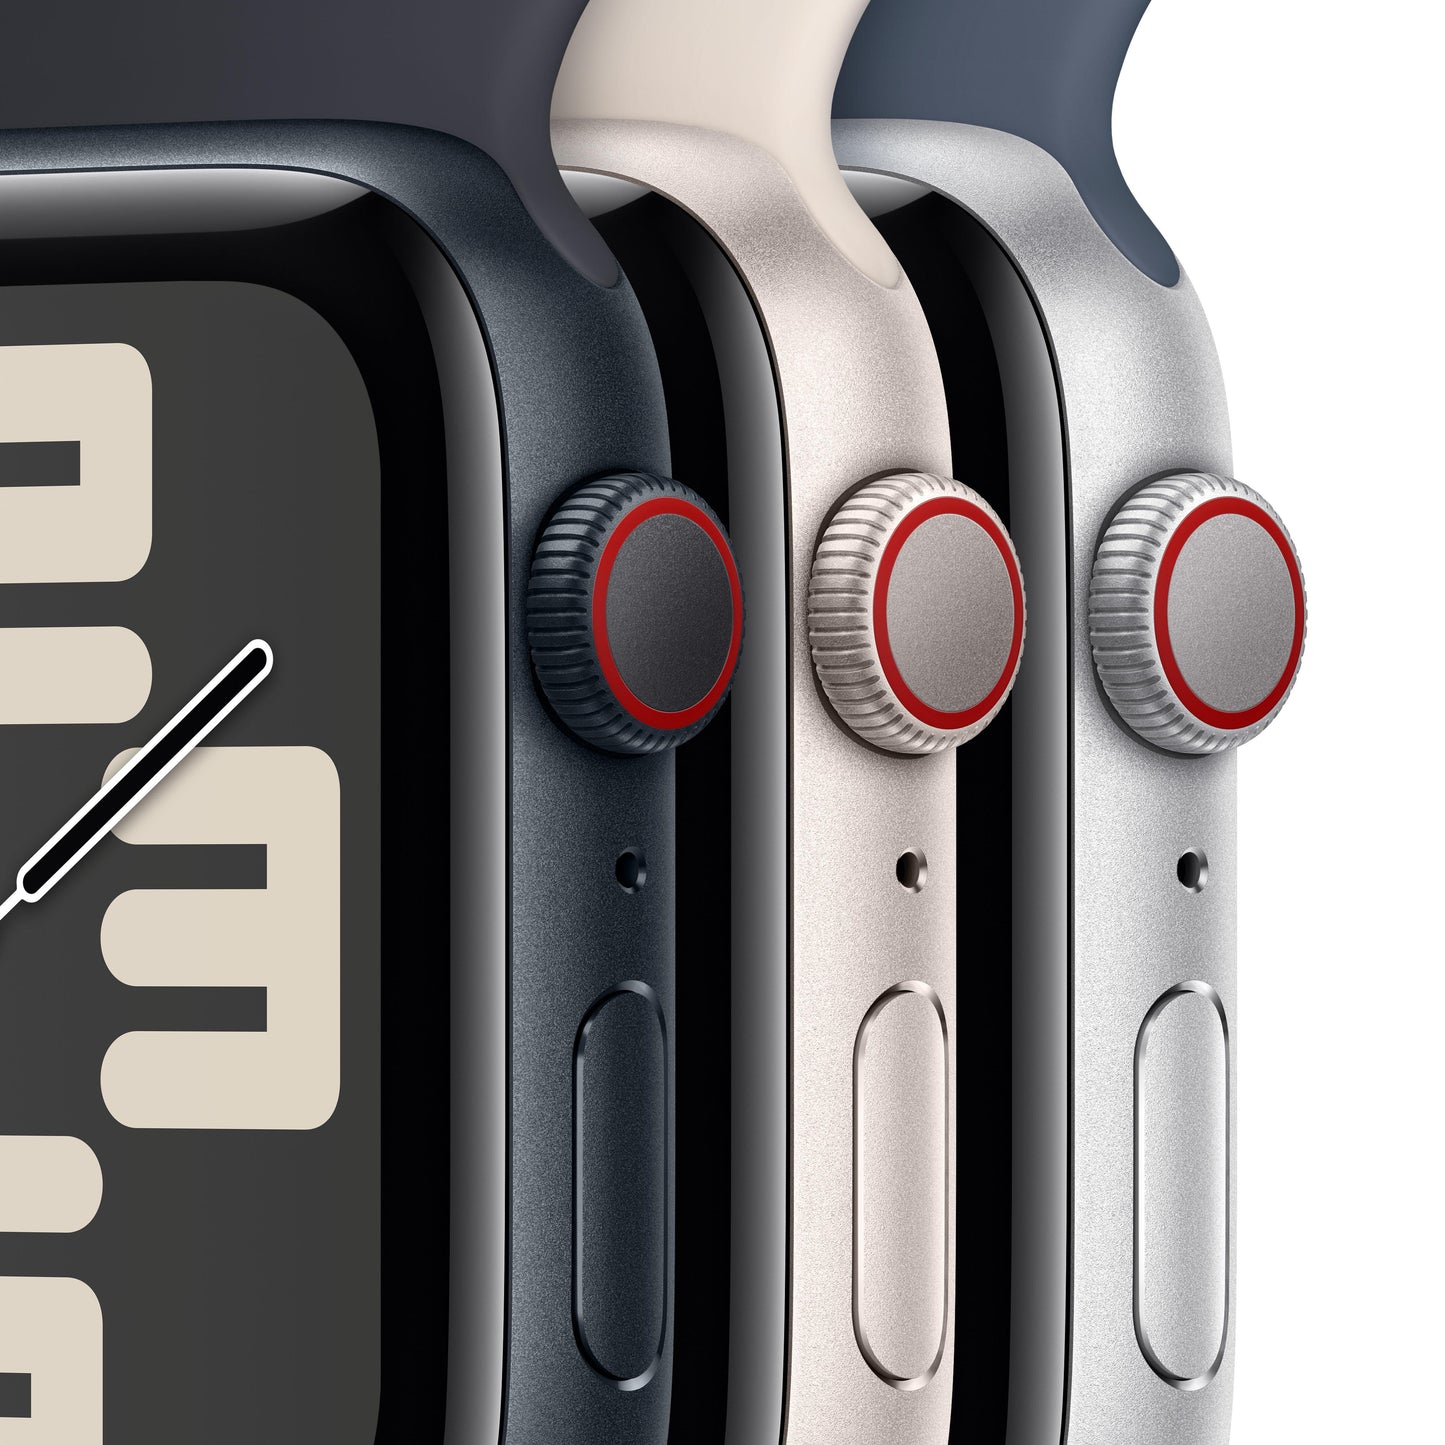 Apple Watch SE (GPS + Cellular) - Caja de aluminio en color medianoche de 40 mm - Correa deportiva color medianoche - Talla M/L